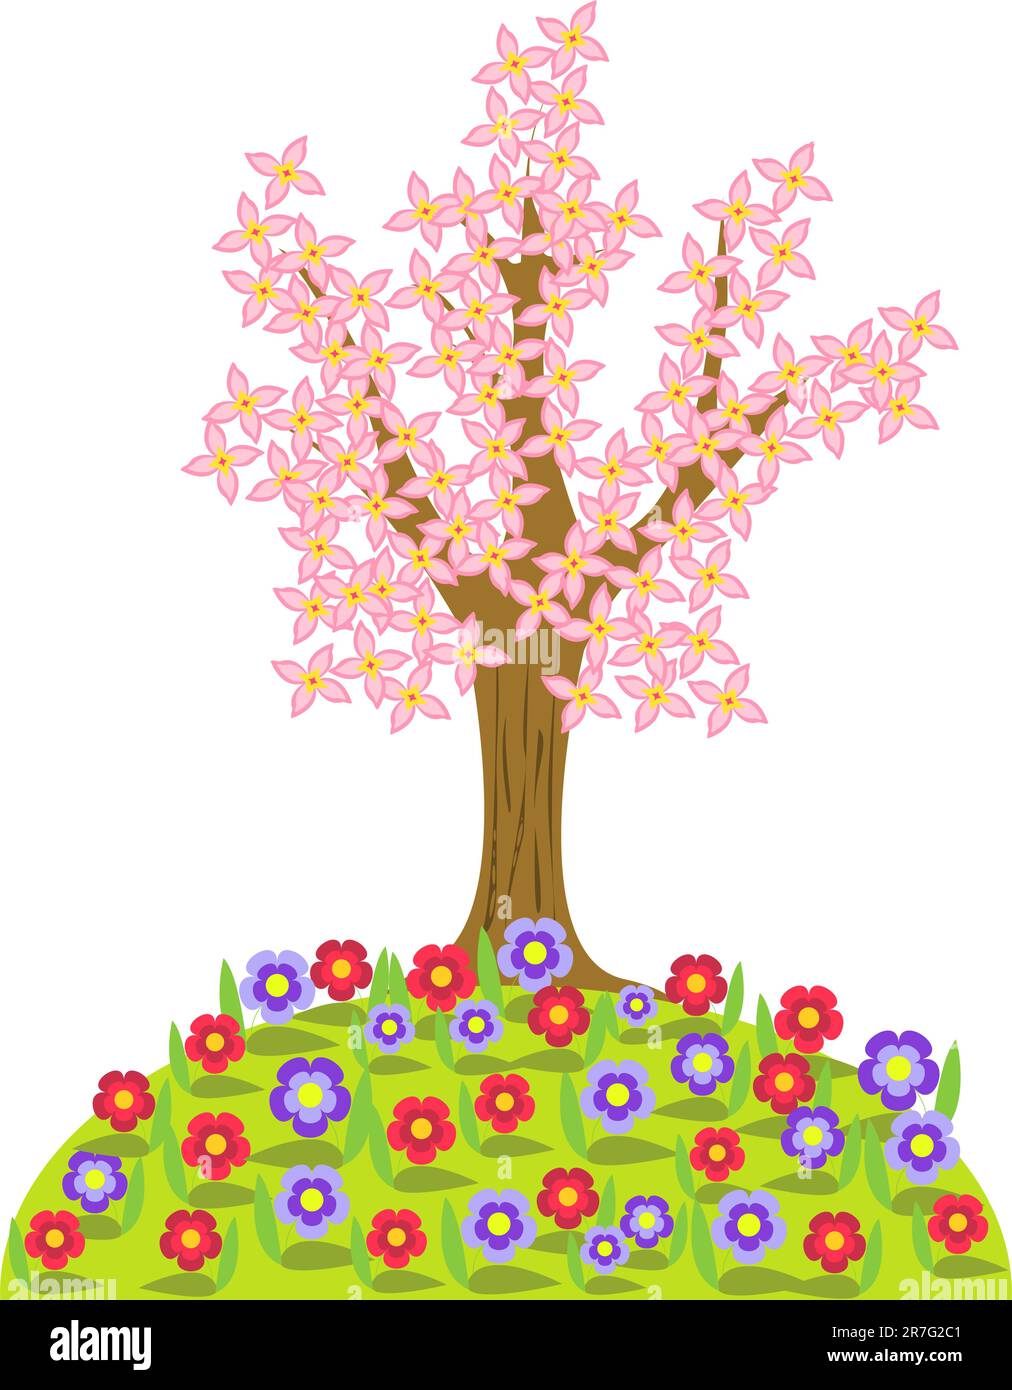 Illustration of pink flowering tree in spring season Stock Vector